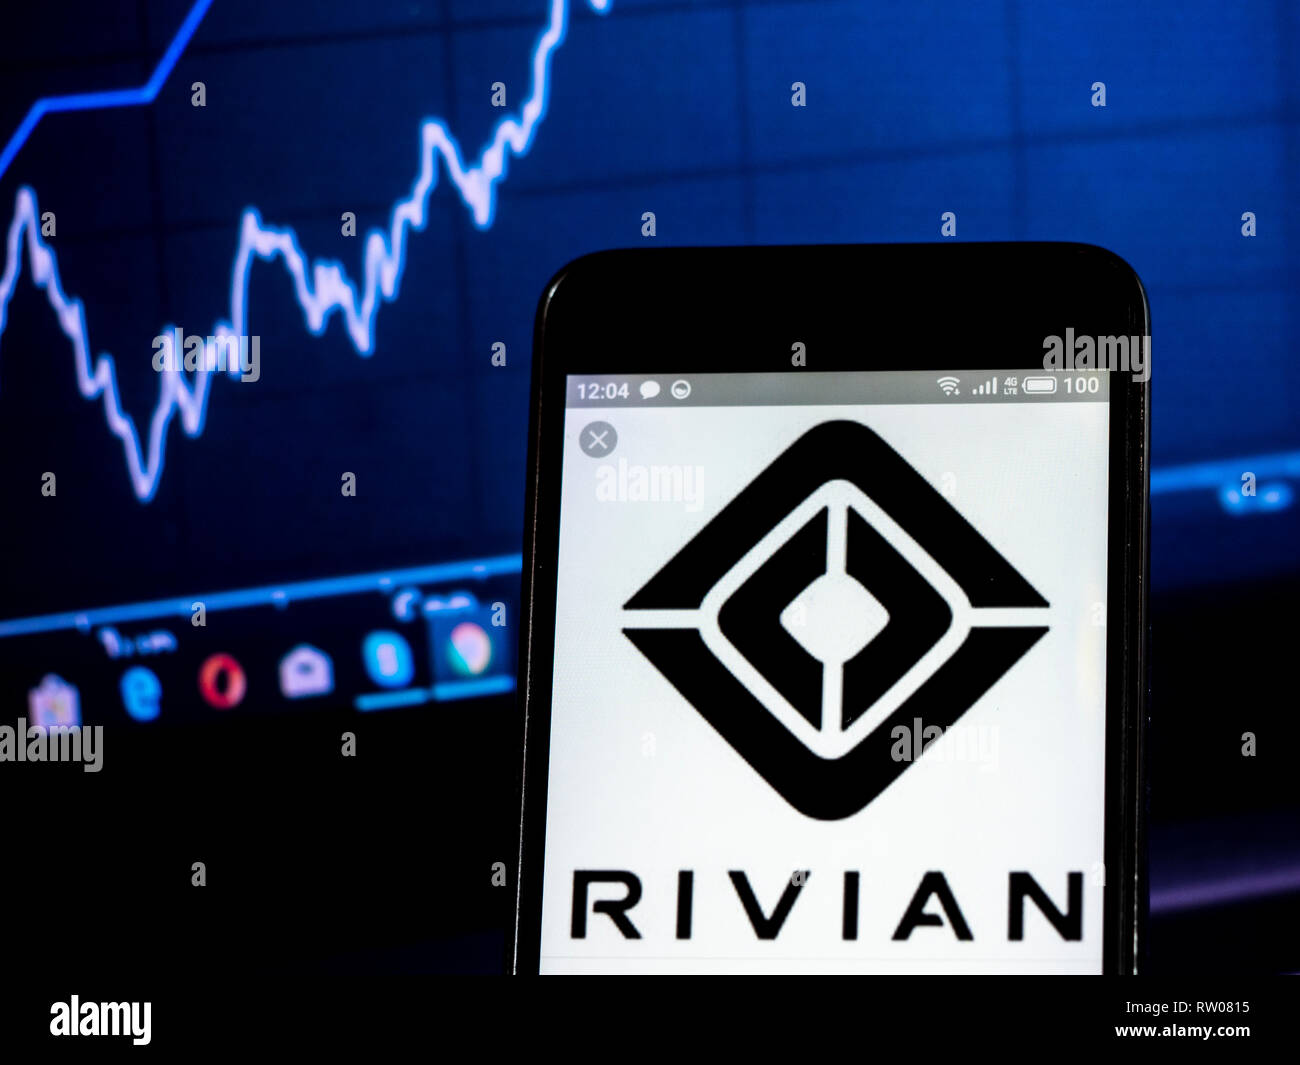 Rivian Automotive company logo seen displayed on smart phone Stock Photo